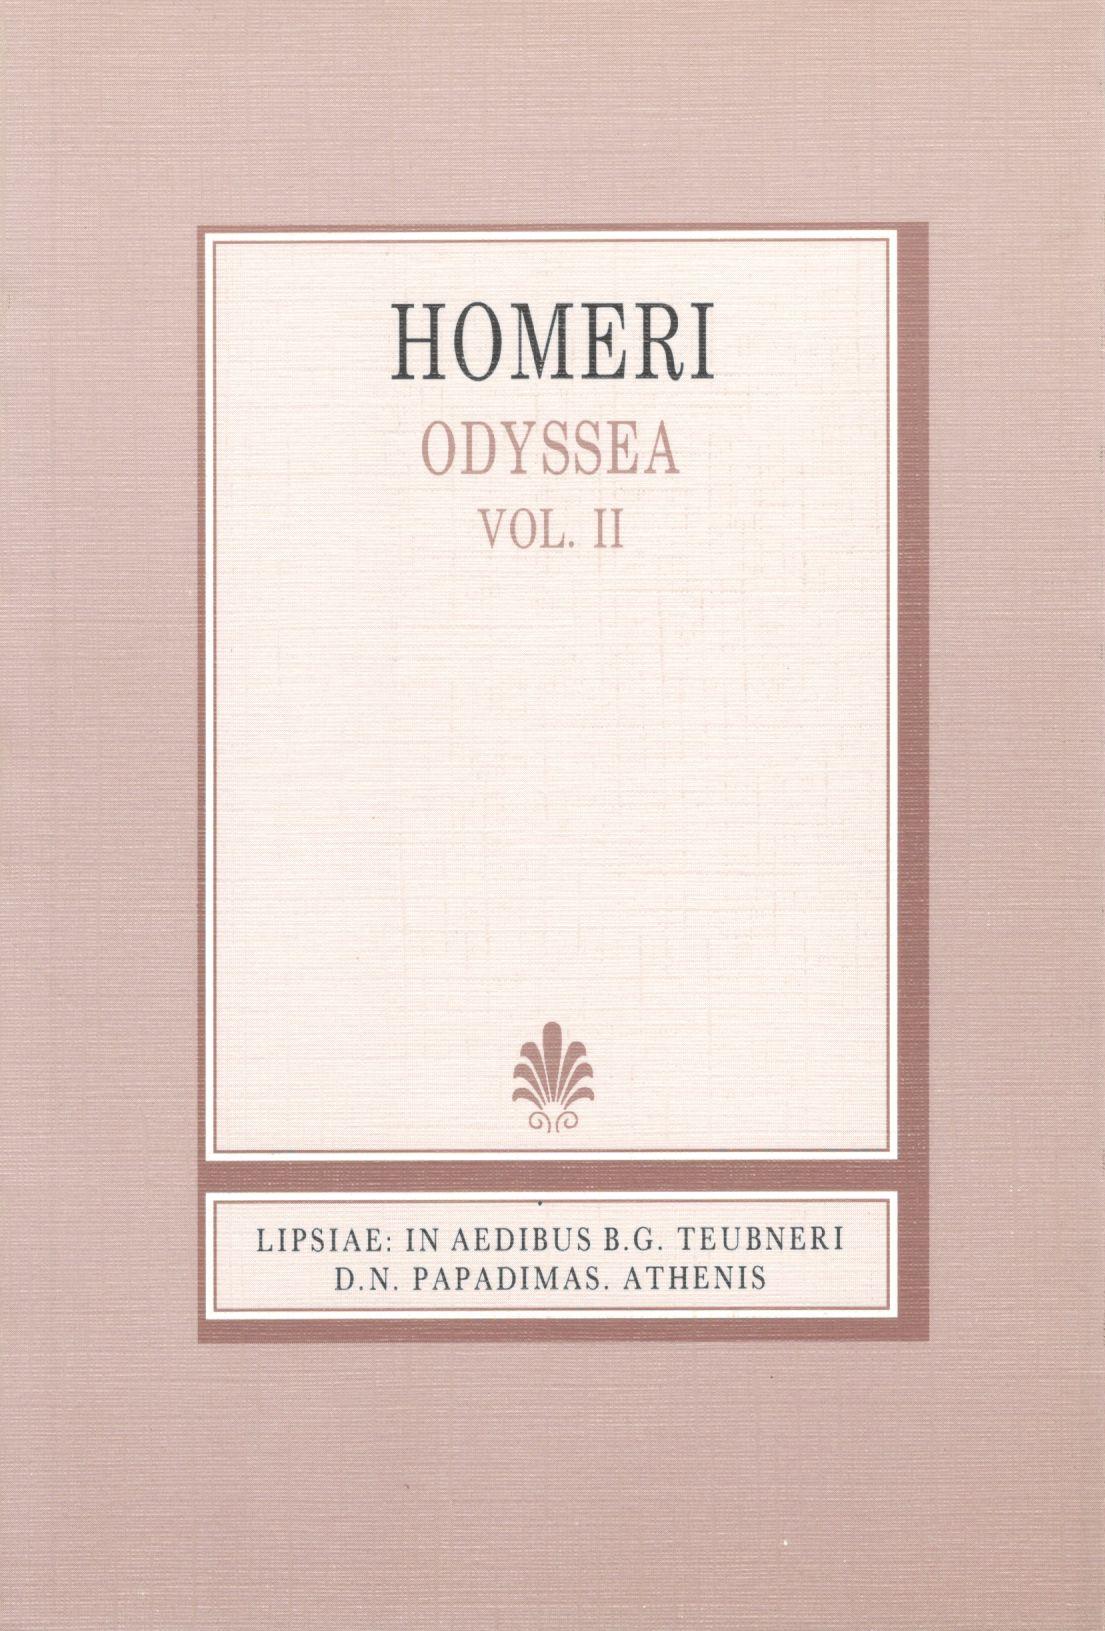 Homeri, Odyssea, Vol. II, [Ομήρου, Οδύσσεια, Ραψωδίαι ν-ω, τ. Β